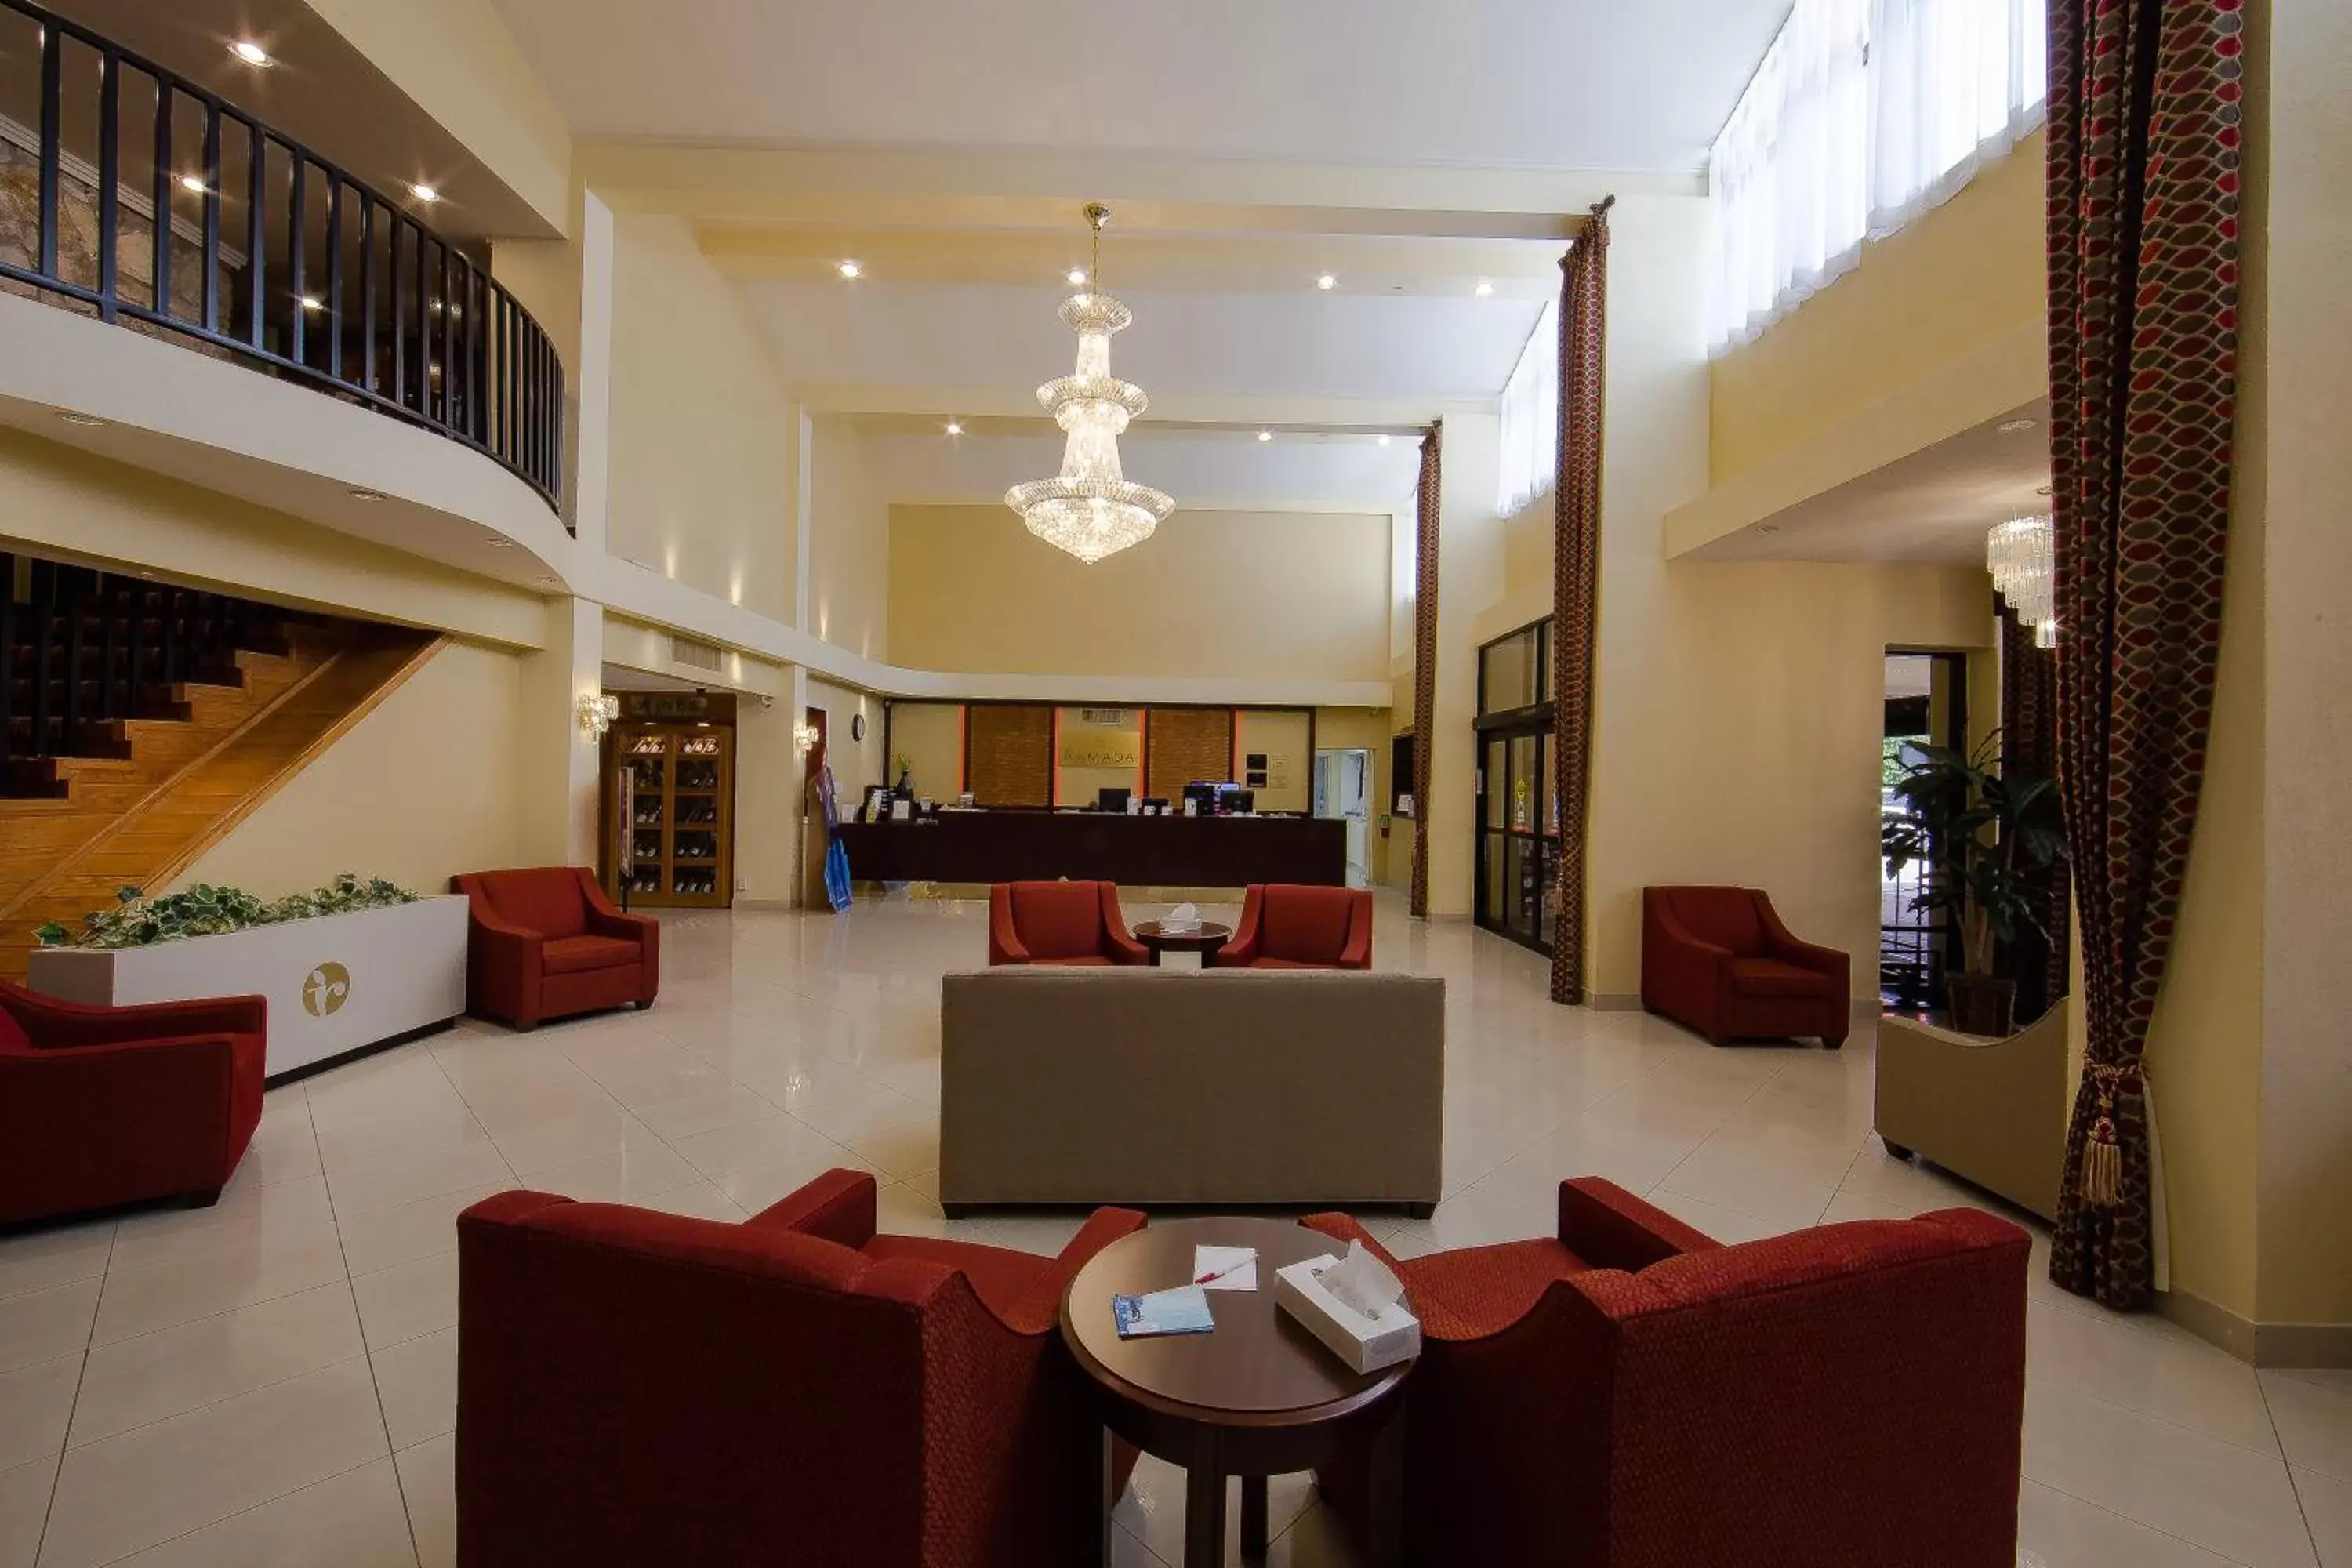 Lobby or reception, Lobby/Reception in Ramada by Wyndham Houston Intercontinental Airport East